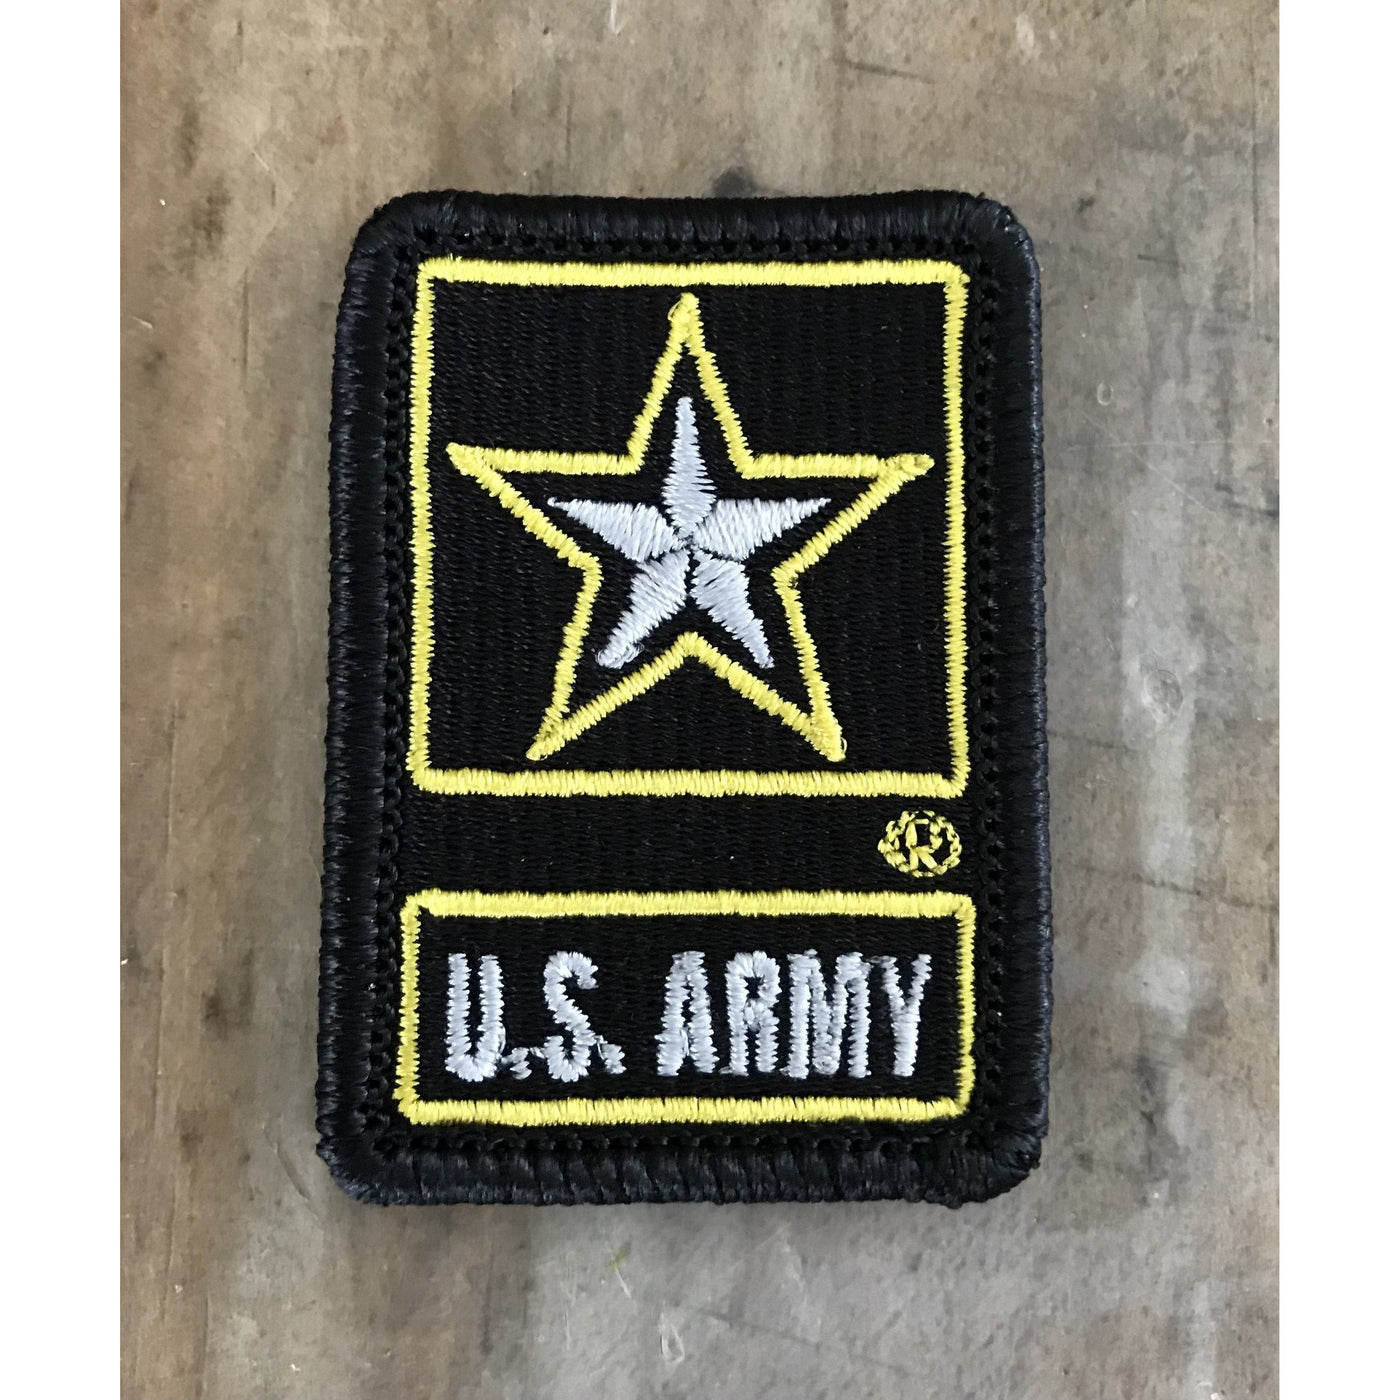 Army Patch